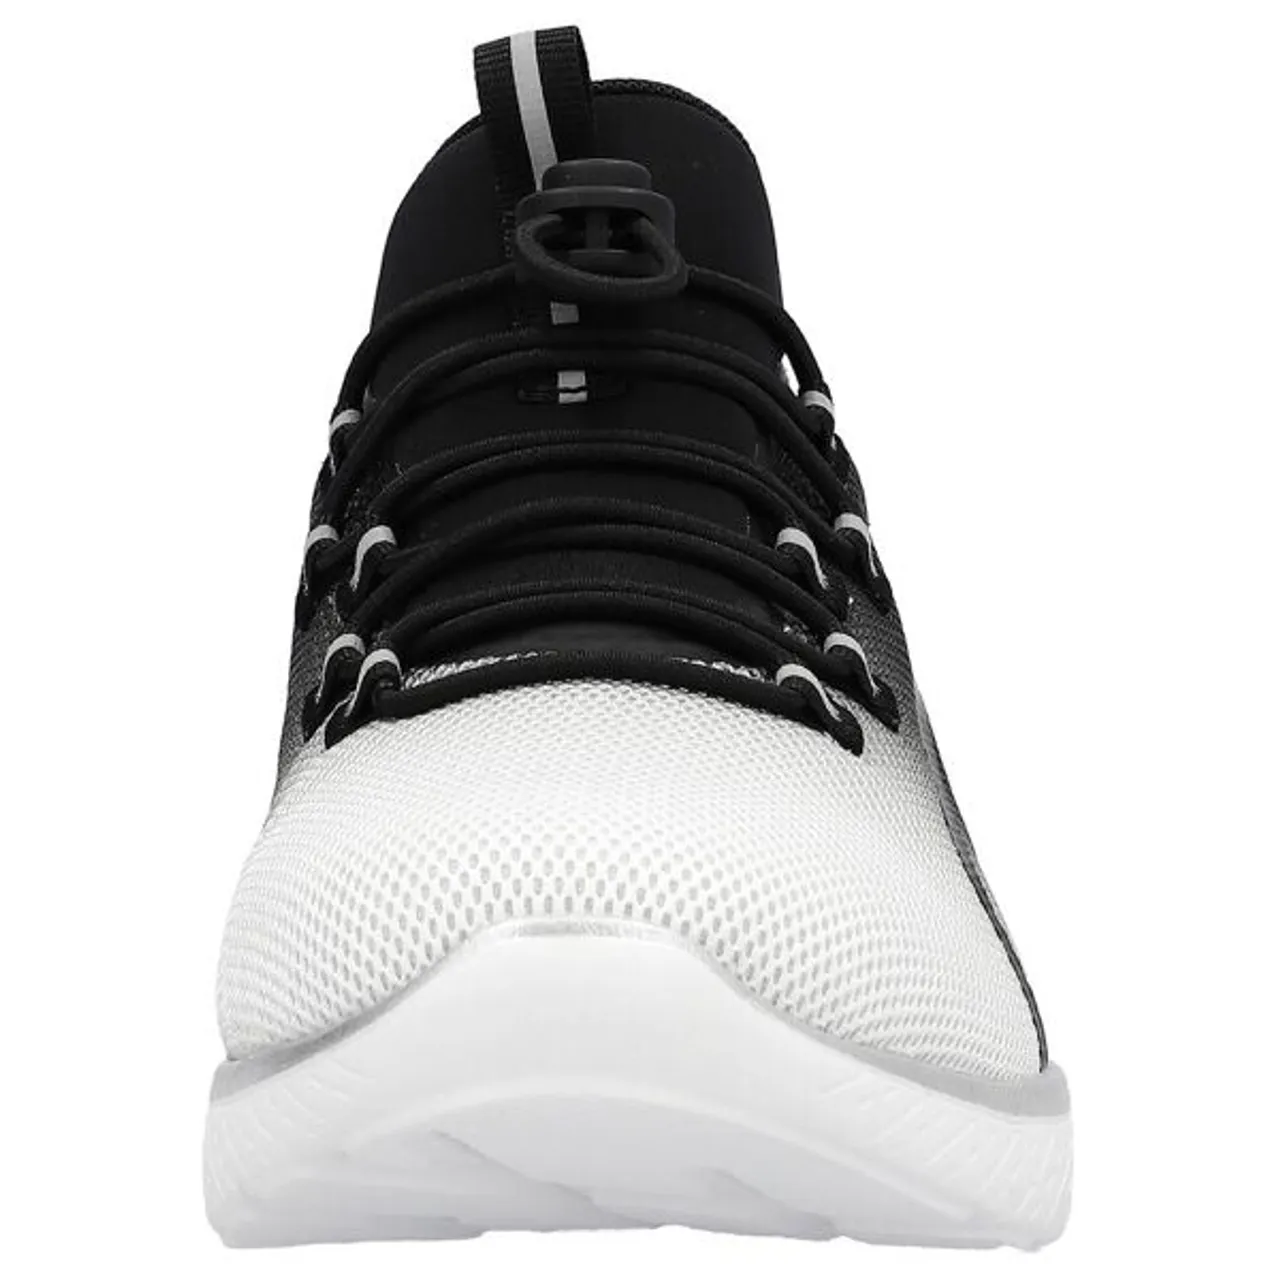 Slip-On Sneaker RIEKER Gr. 36, schwarz (schwarz kombiniert) Damen Schuhe Slipper